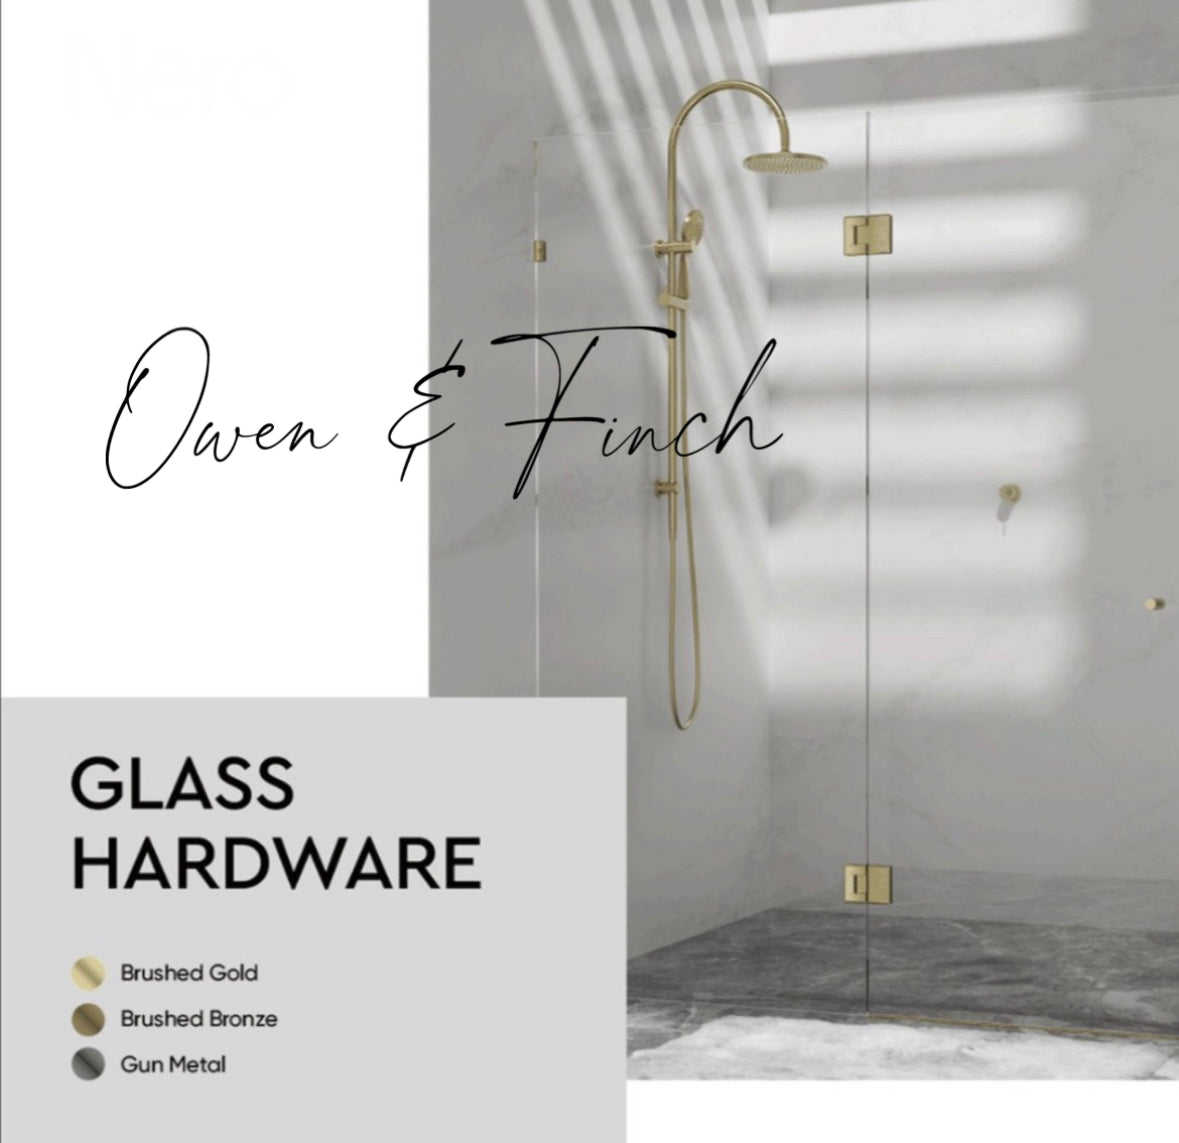 Owen & Finch Glasbeslag Wand- Vloerbevestigingsplaat Brushed Champagne Gold PVD Set Van 2